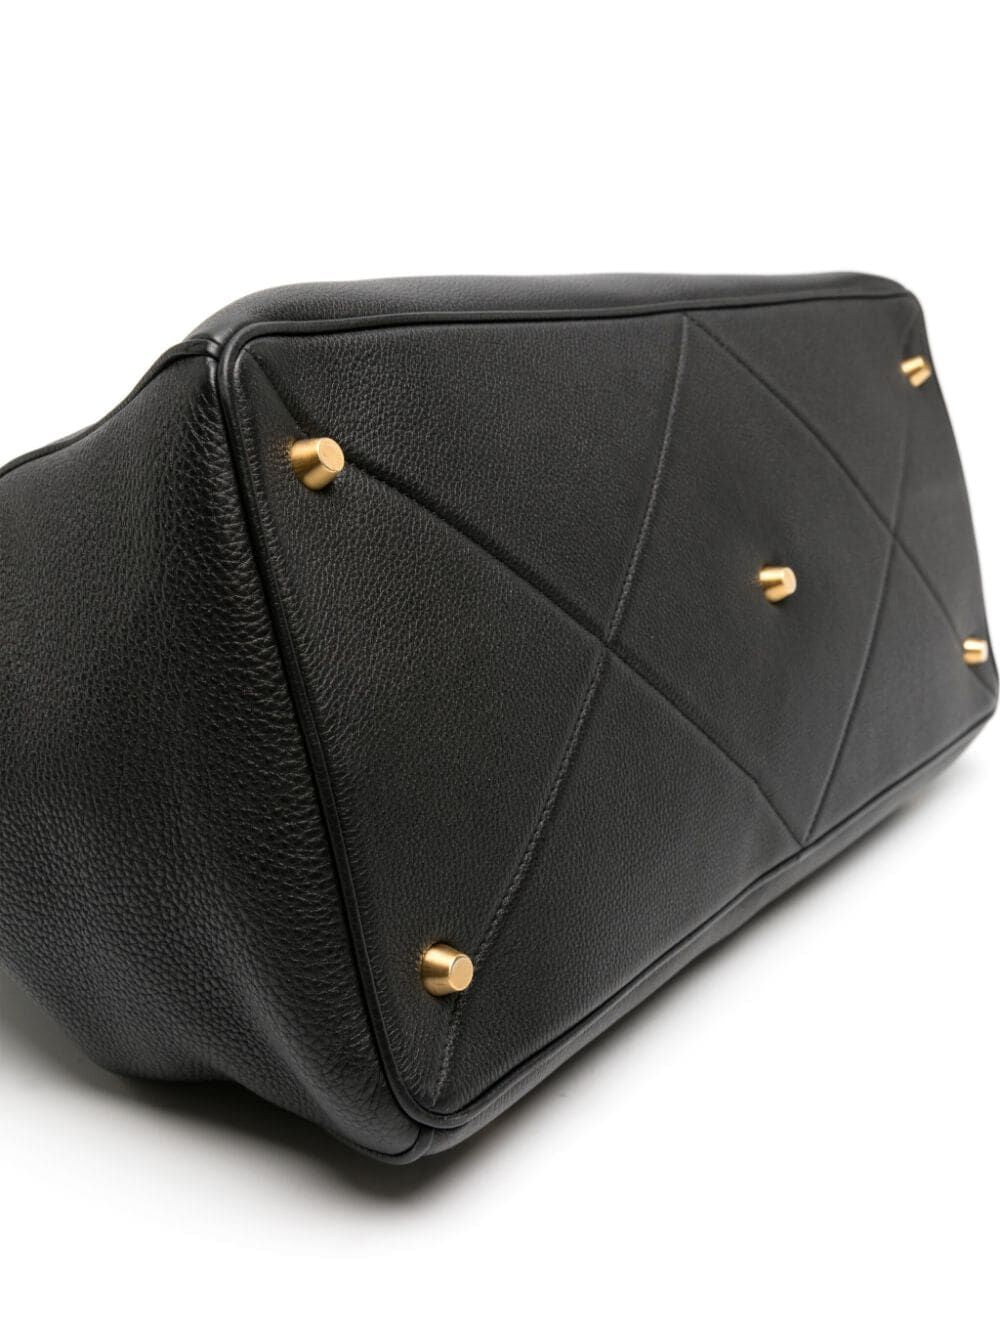 Soft Mr. Thom Luggage Bag Withrwb Shoulder Strap In Soft Pebble Grain Leather